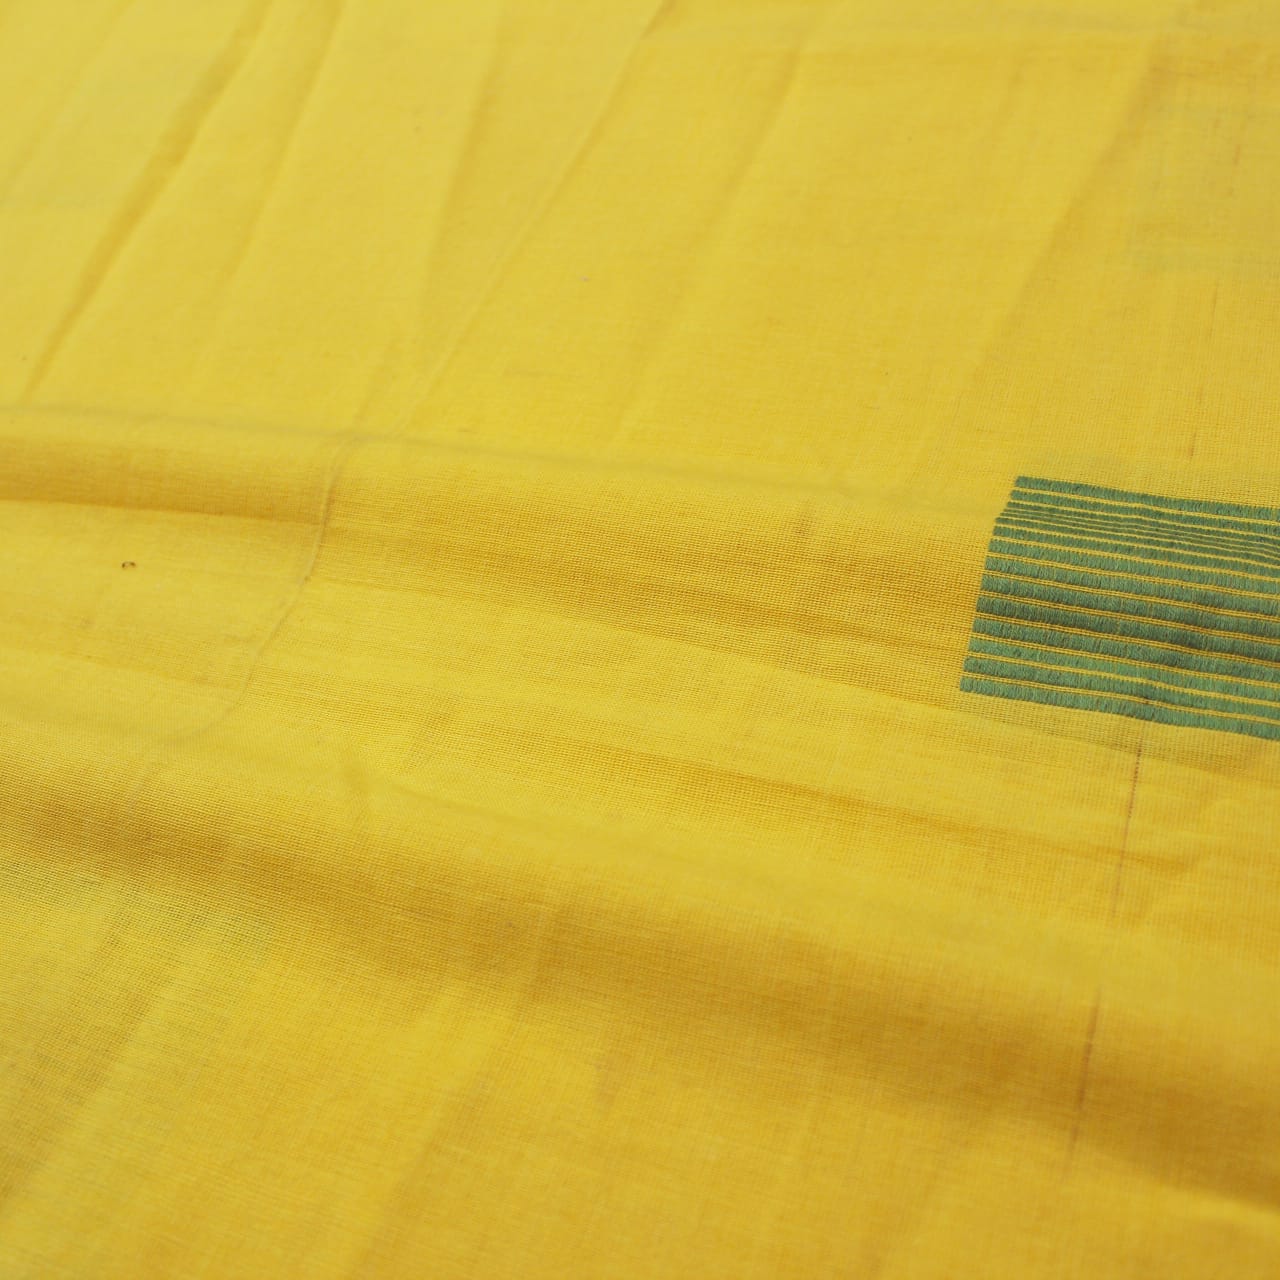 ALPHA Woven Cotton Plain 1 Pc Table Cover - Yellow